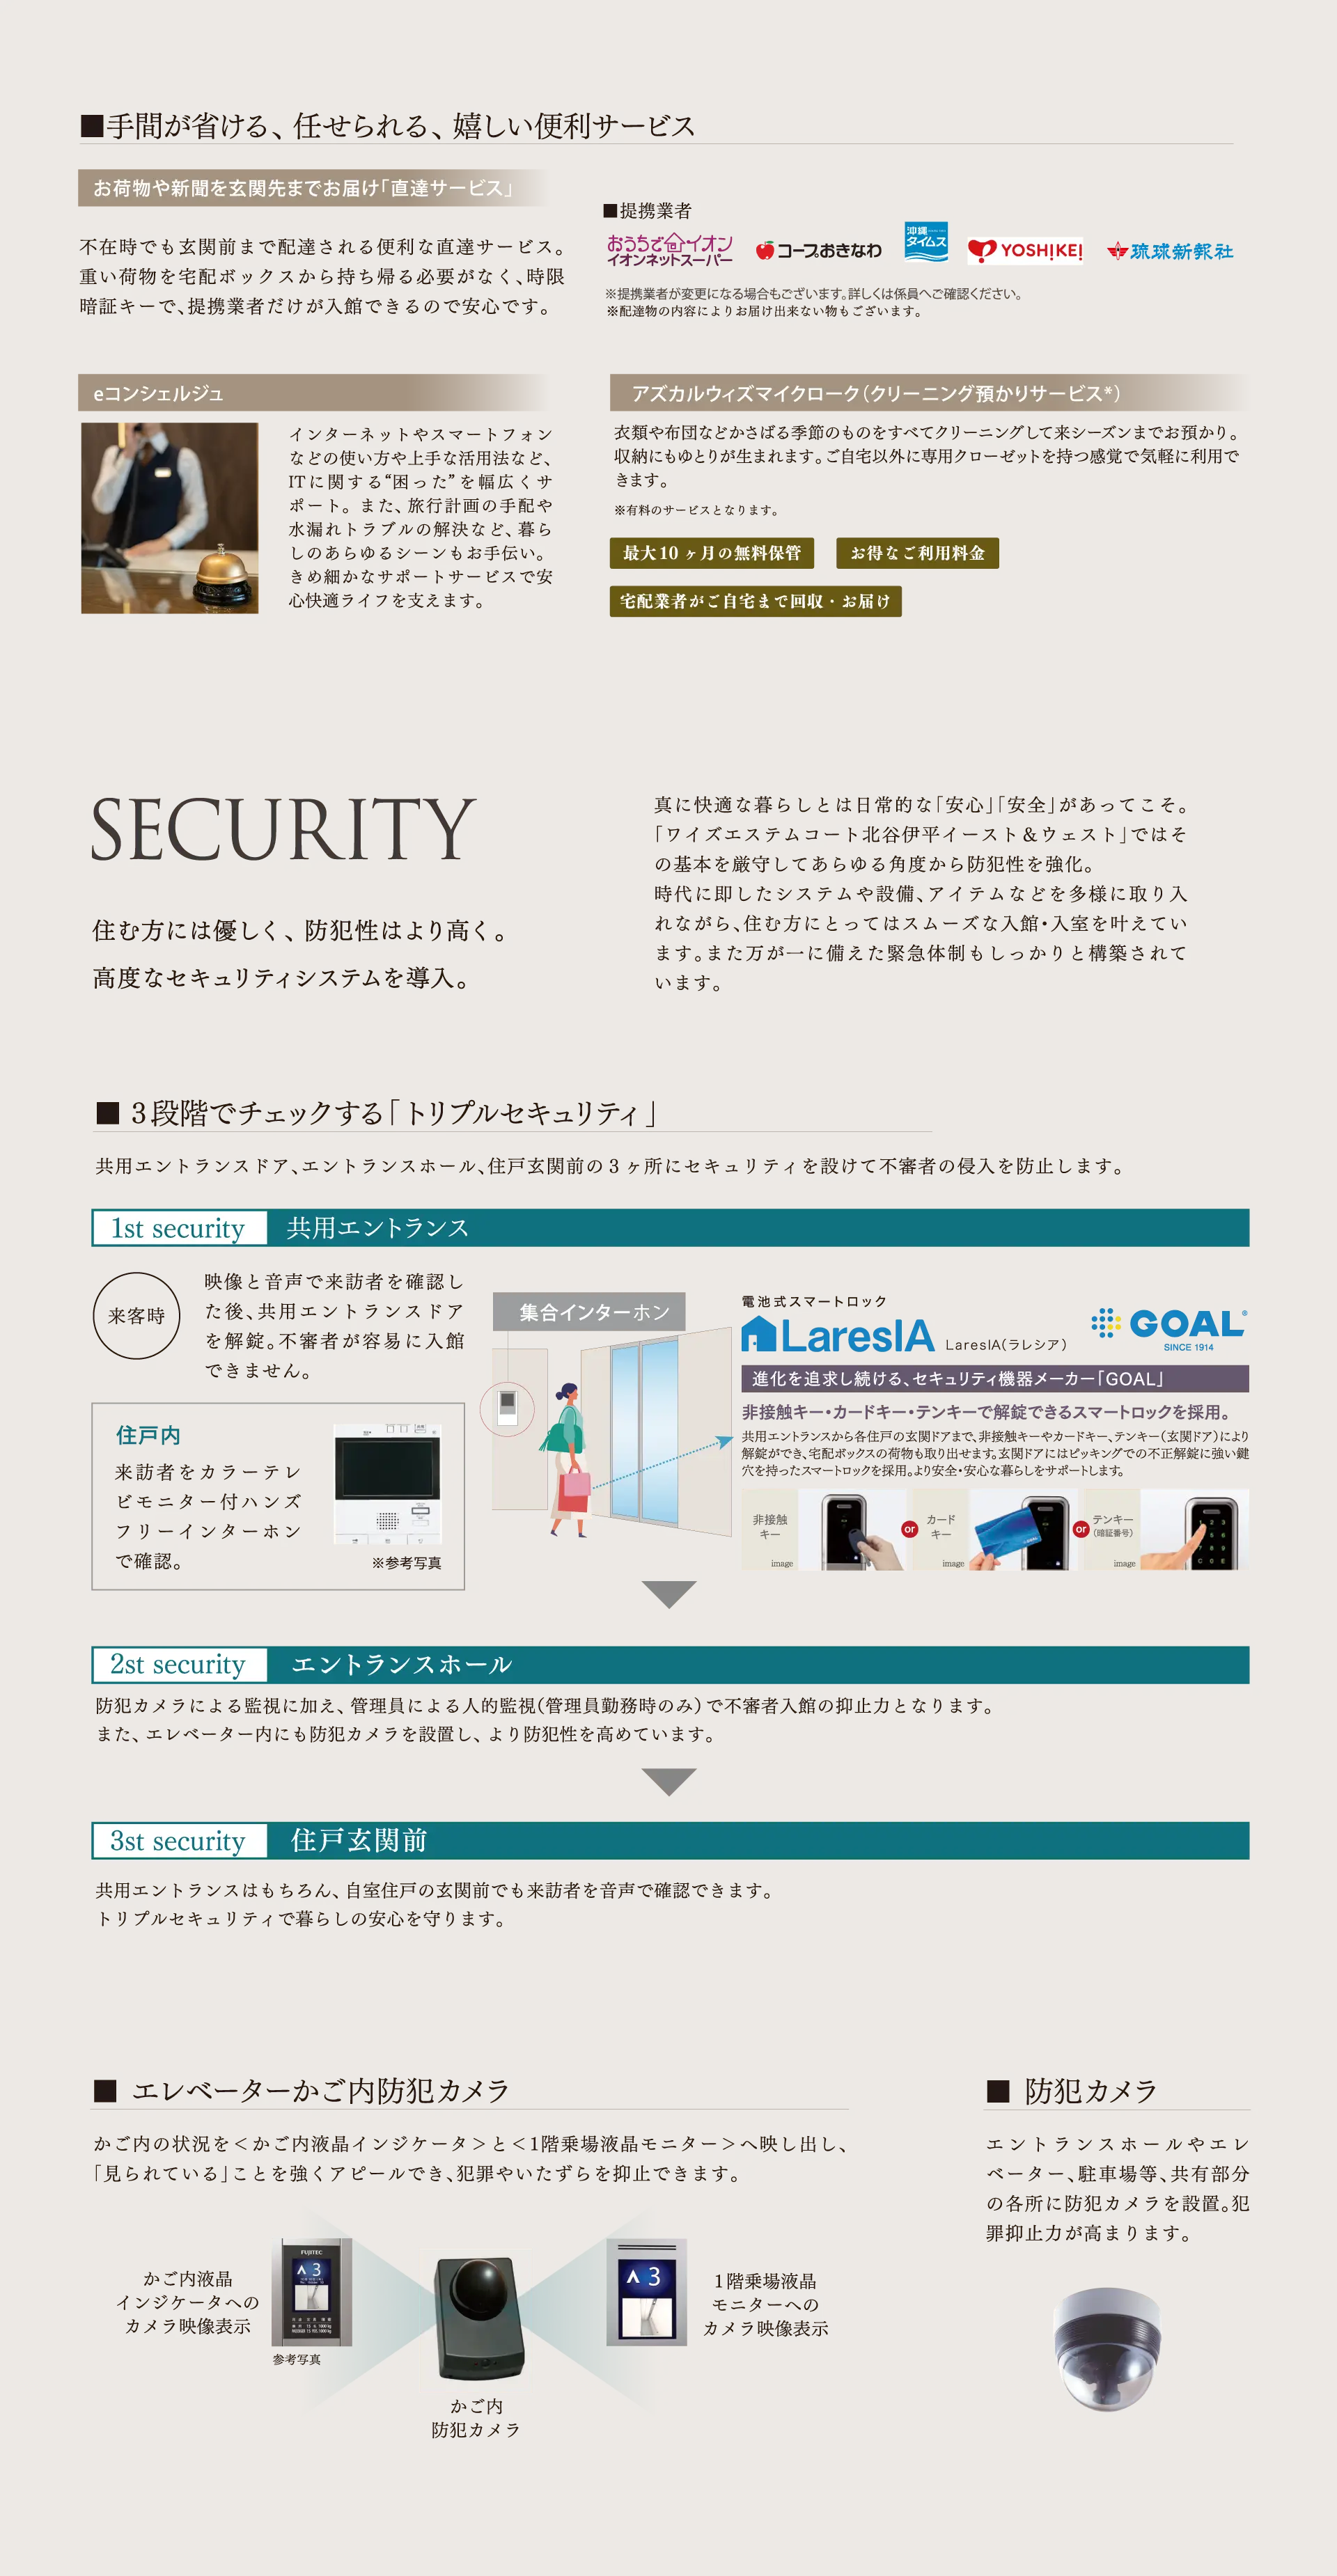 SECURITY 住む方には優しく、防犯性はより高く。高度なセキュリティシステムを導入。セキュリティの解説。